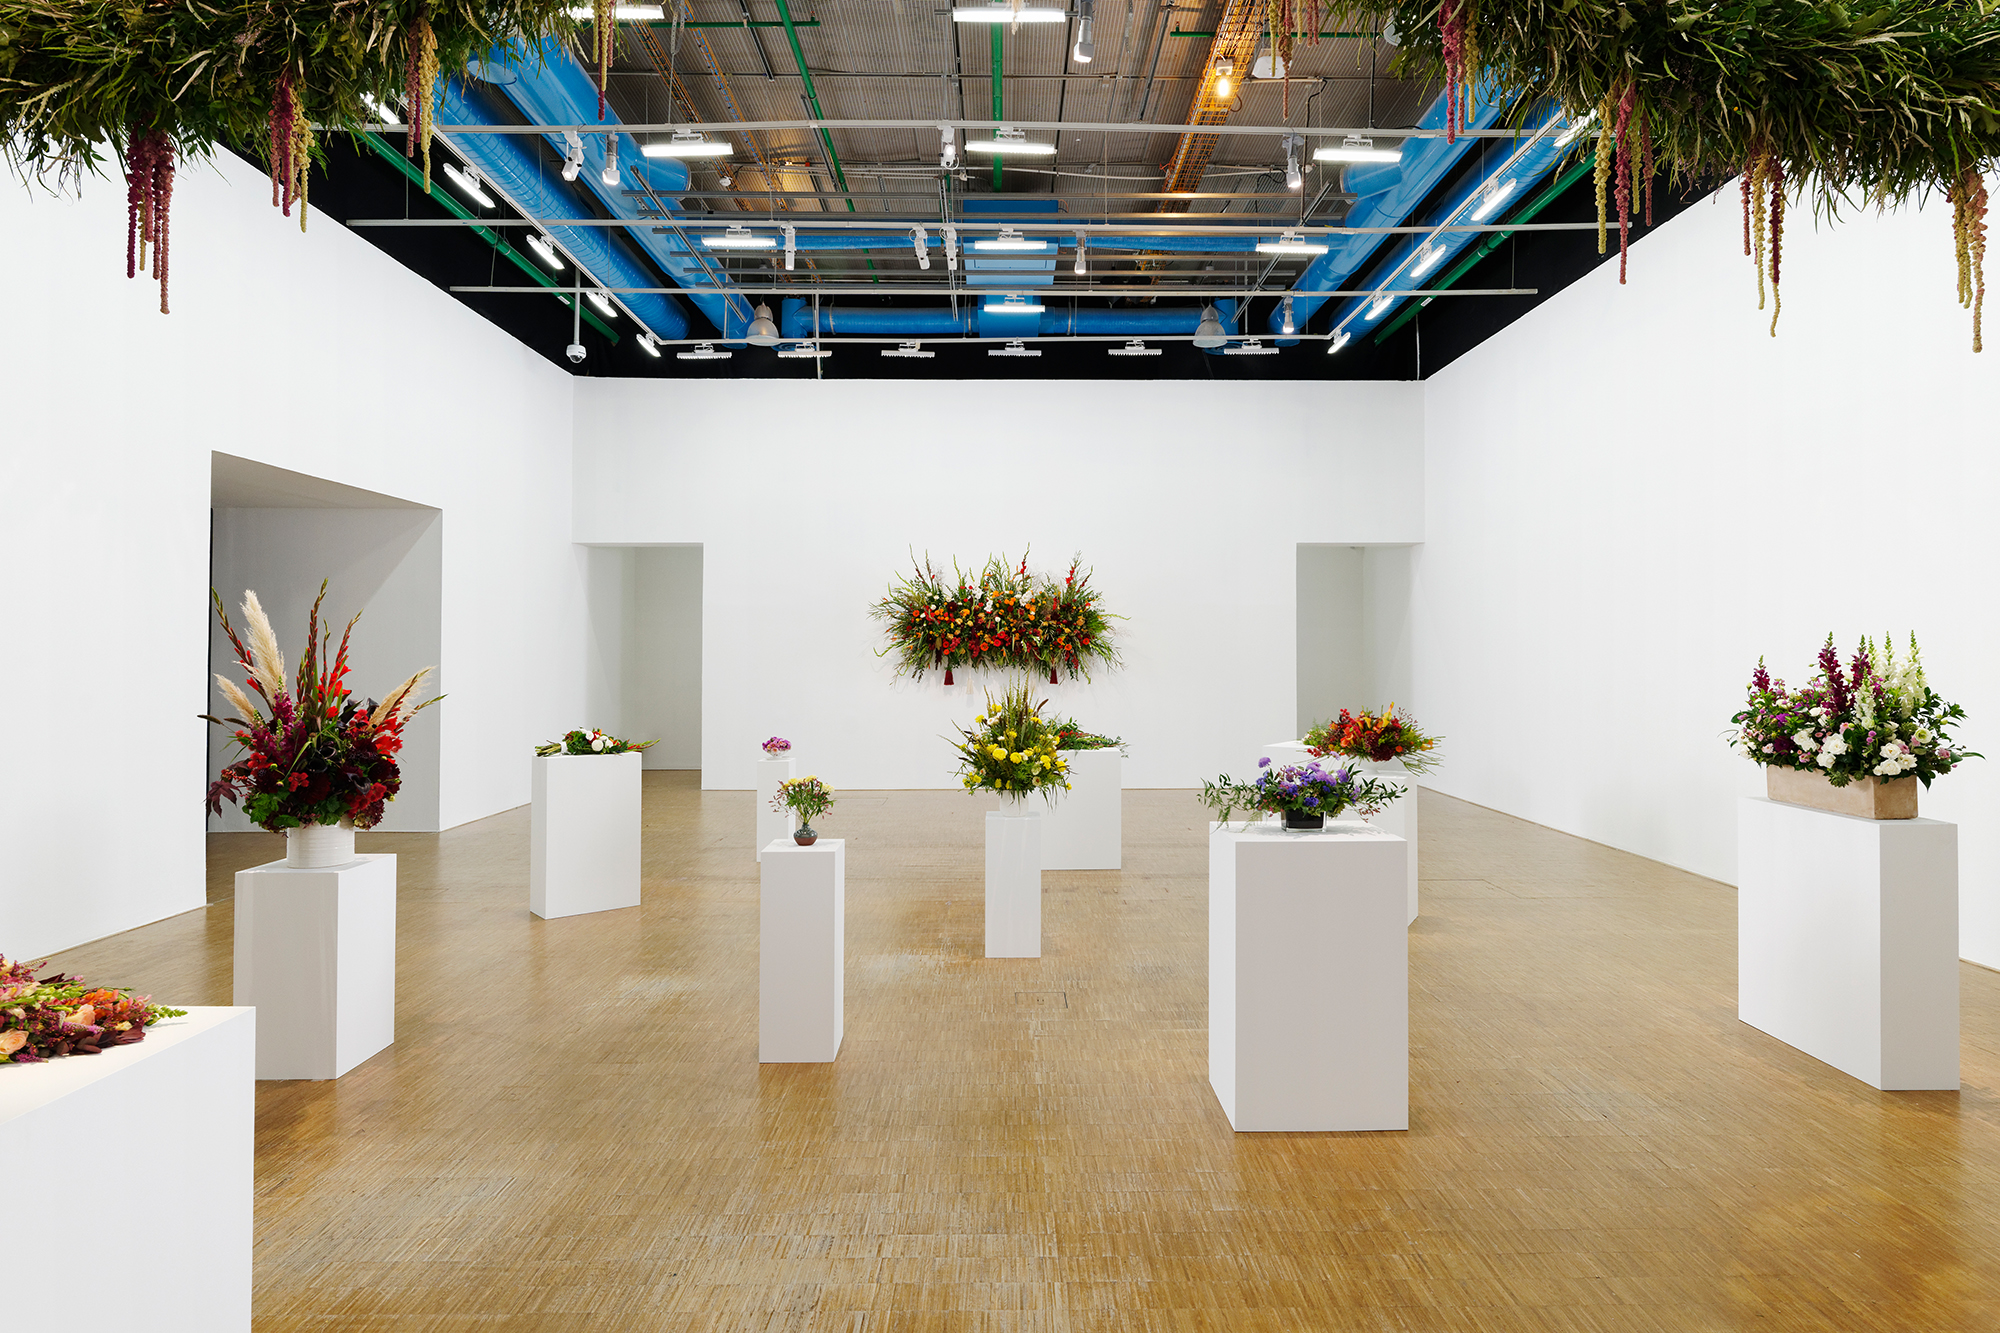 Kiwanga s Flowers for Africa exhbition at the Center Pompidou, Paris.